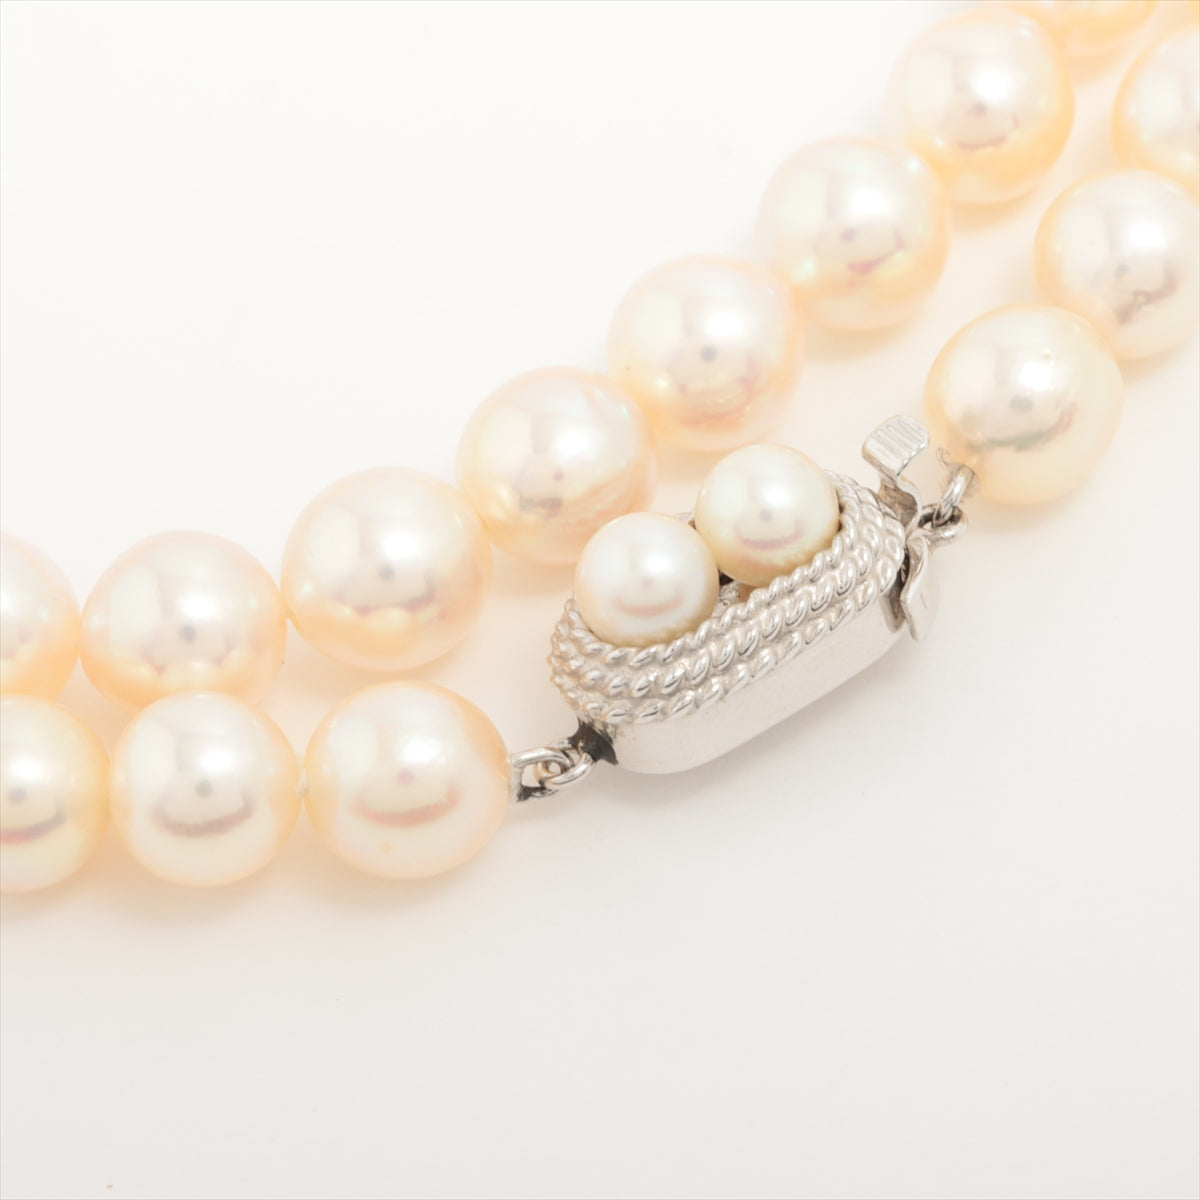 TASAKI Pearl Necklace K14WG Total 37.4g Approx. 7.5mm-8.0mm